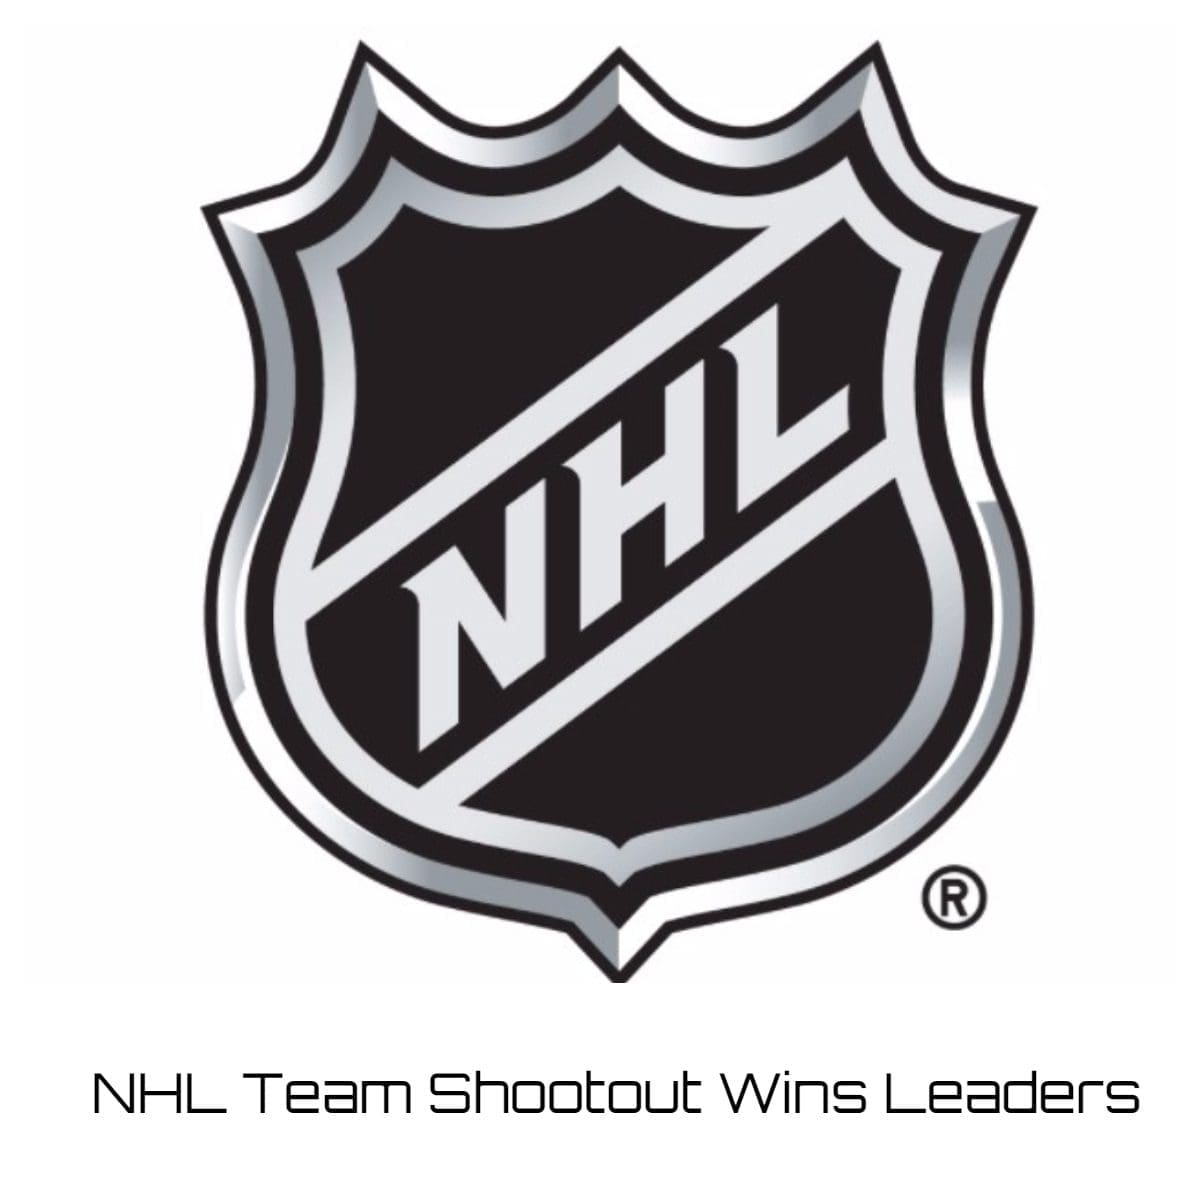 NHL Team Shootout Wins Leaders